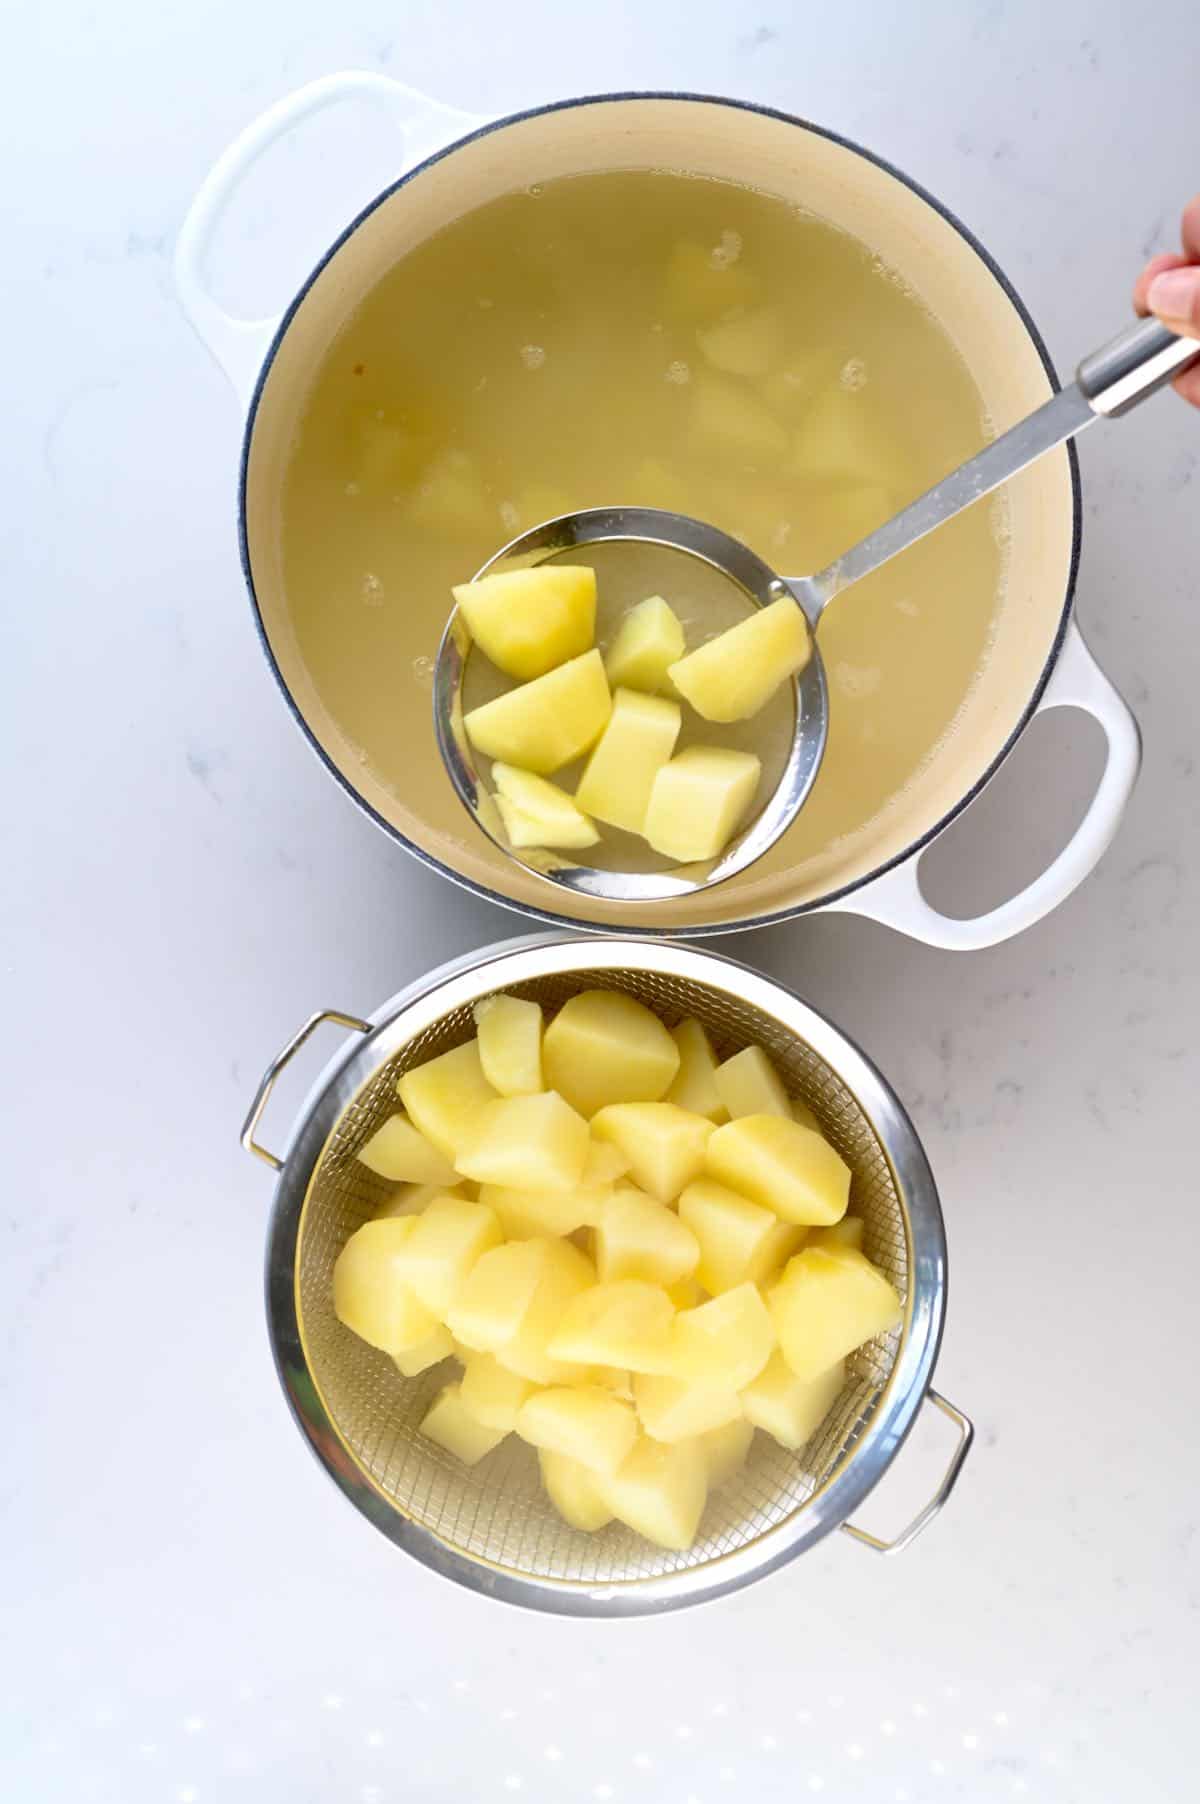 Draining boiled potatoes